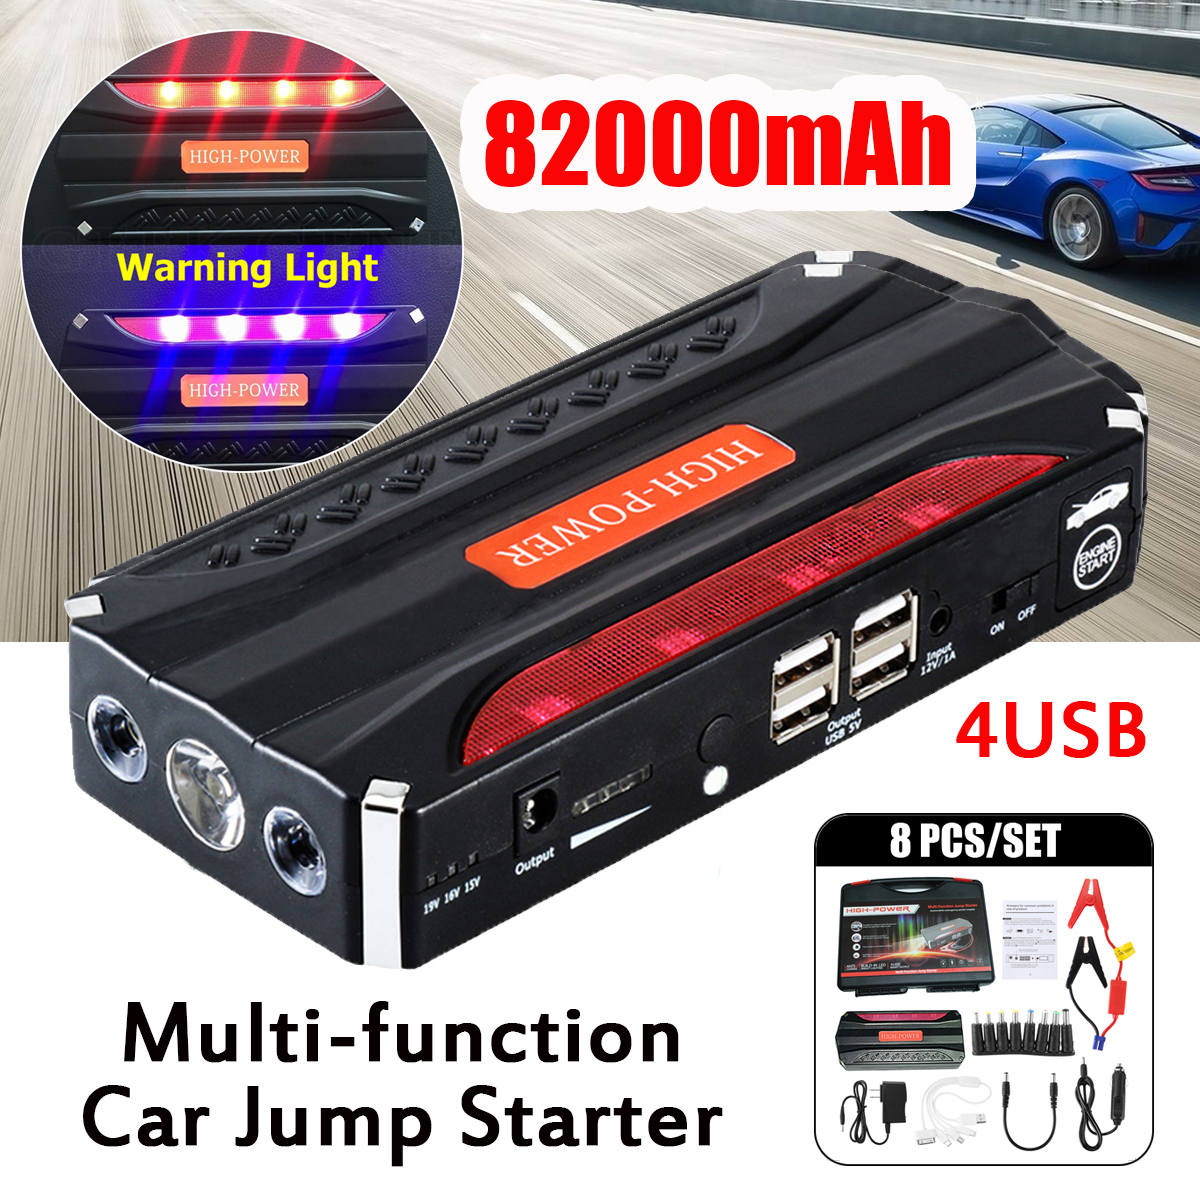 82000mAh-4-USB-Multi-function-Auto-Jump-Starter-LED-Emergency-Battery-Power-Bank-1386900-1